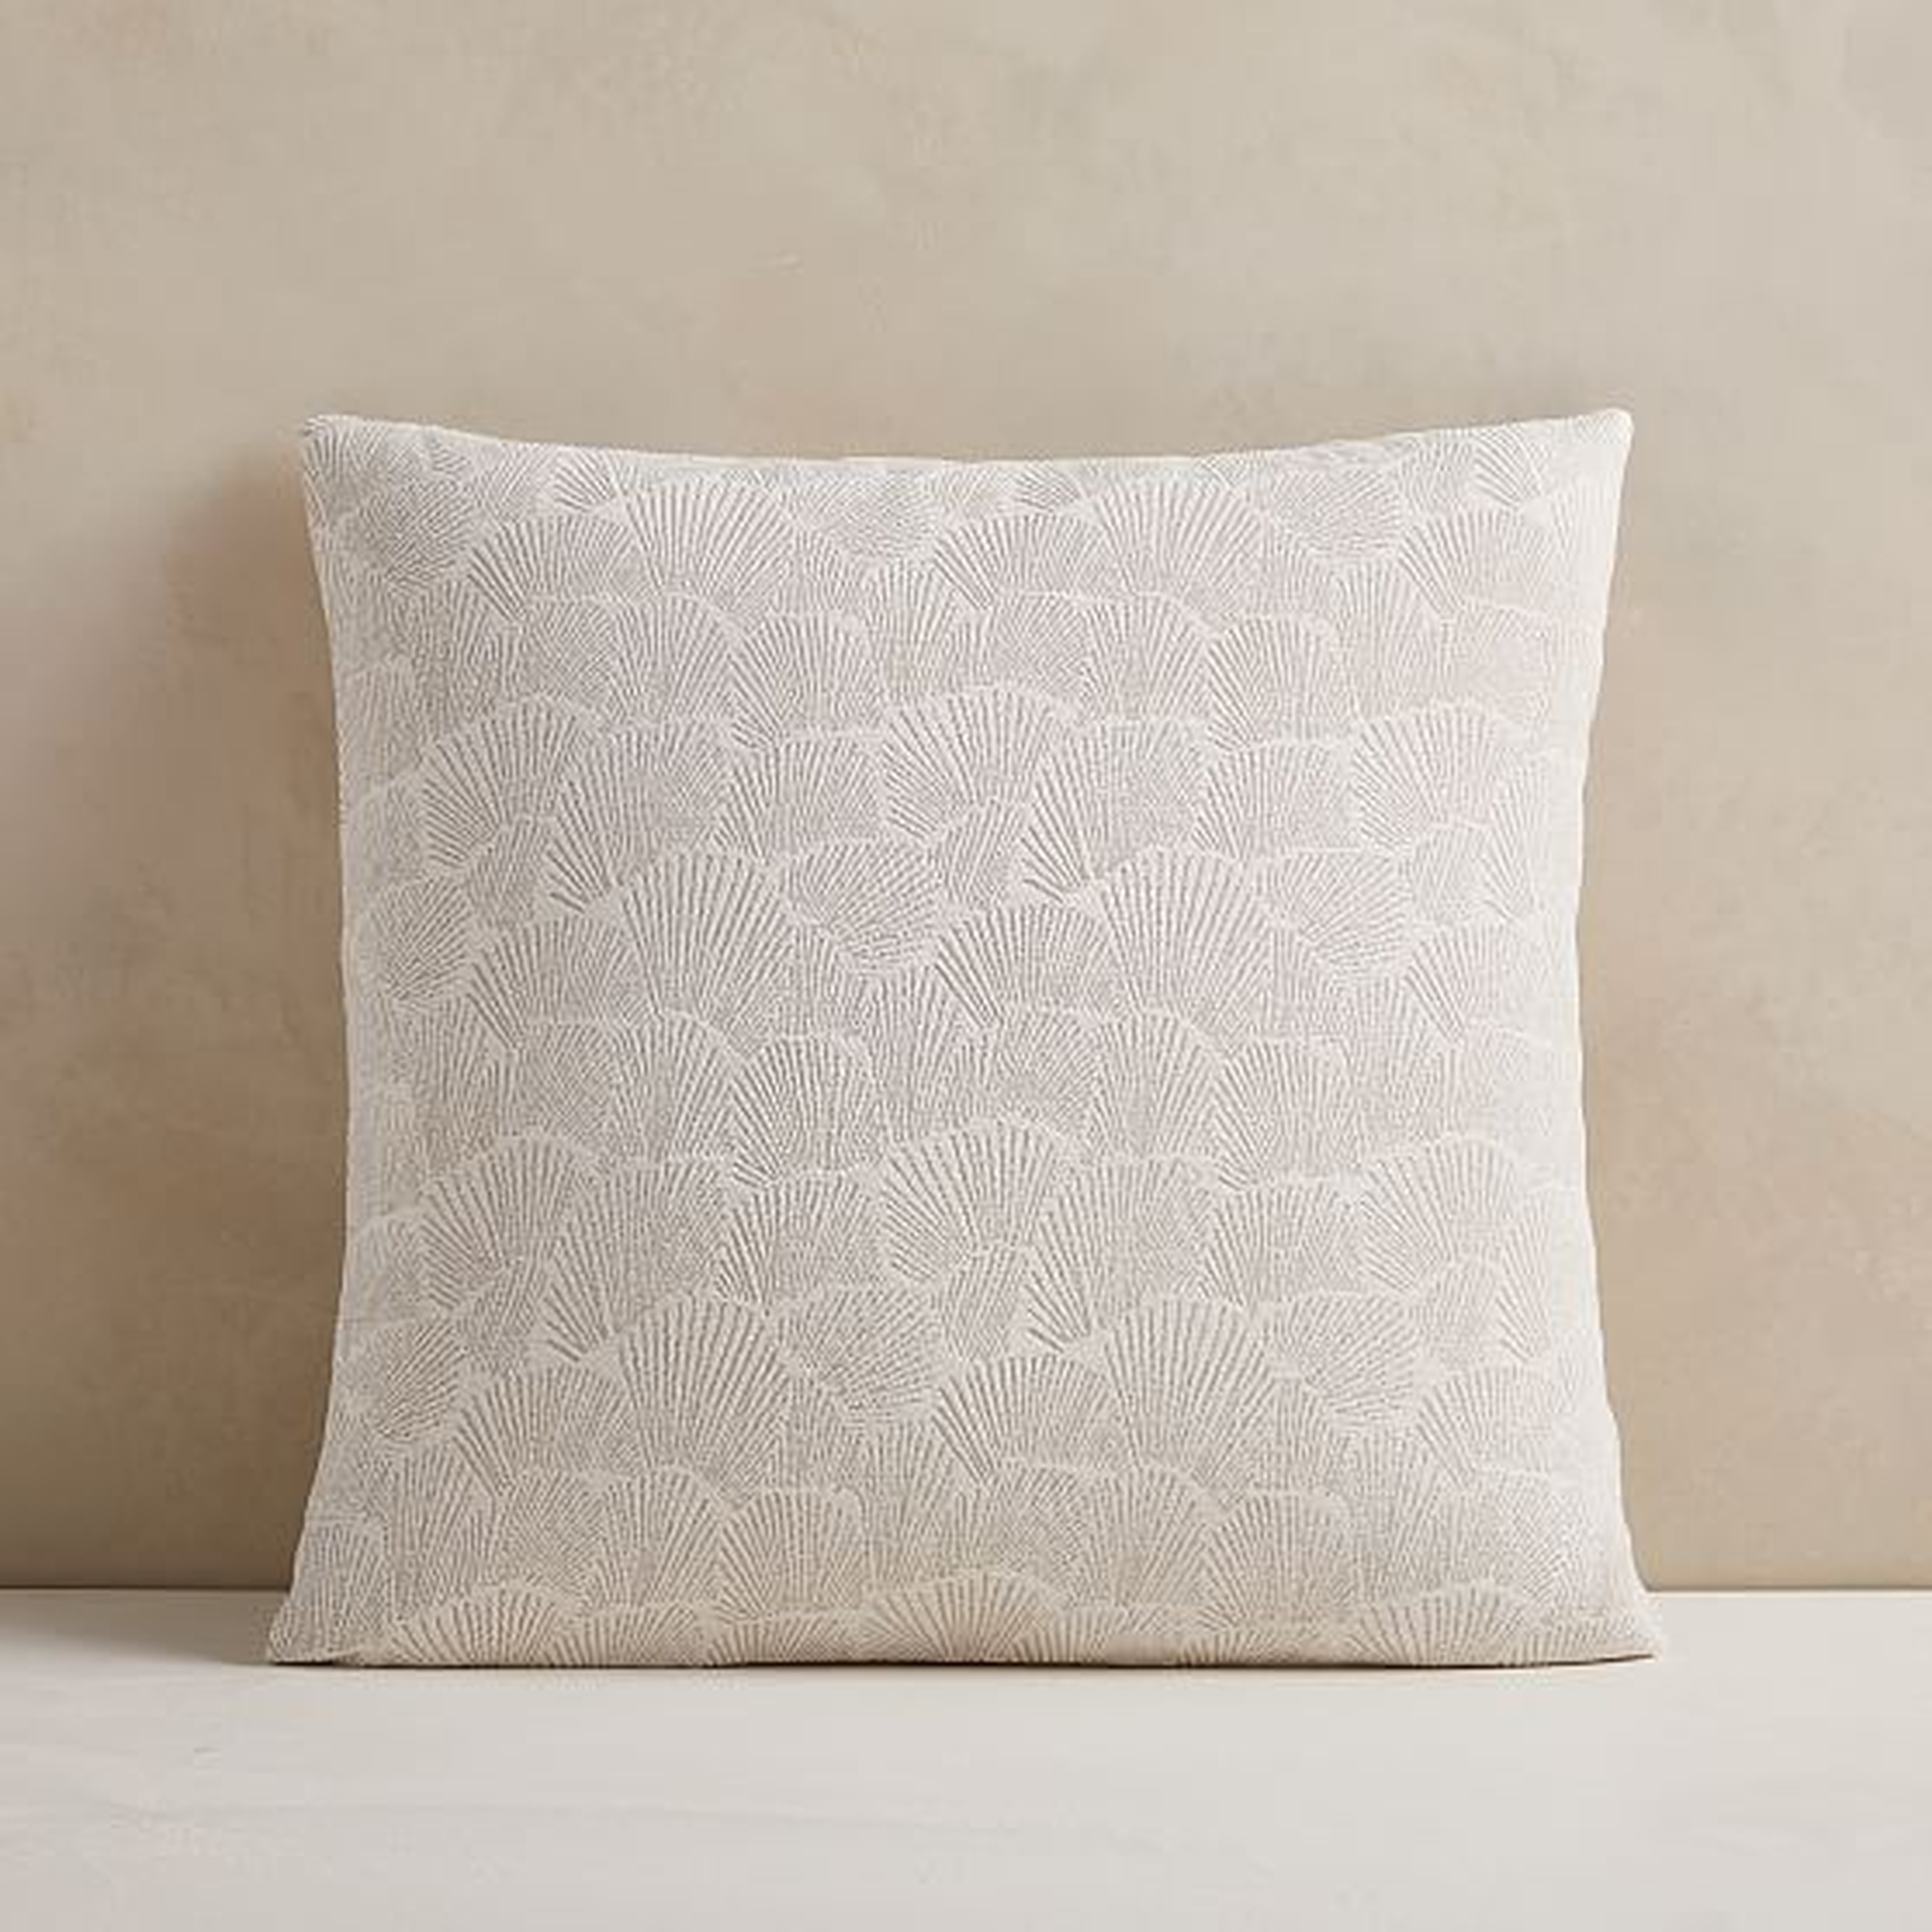 Deco Shells Pillow Cover, 20"x20", White - West Elm